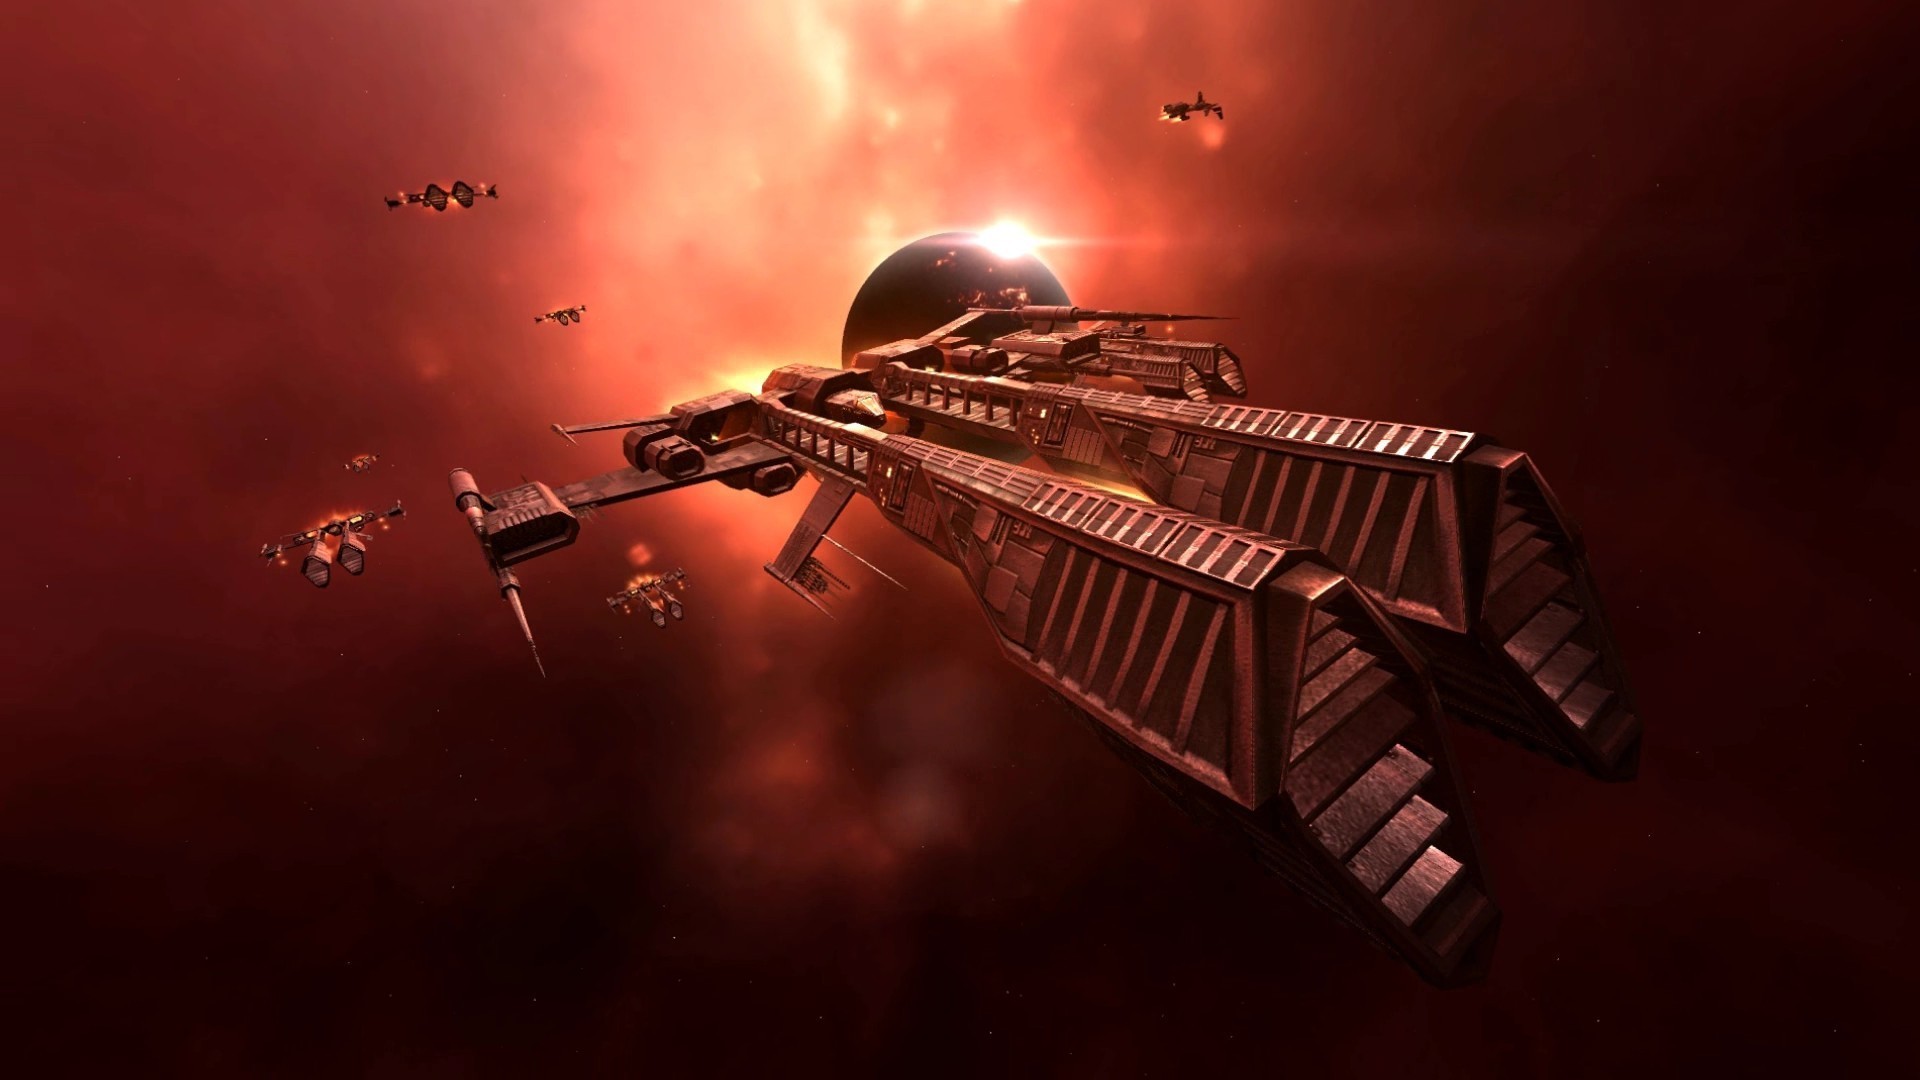 HD Desktop Wallpaper Of Eve Online Photo Space Ship Px